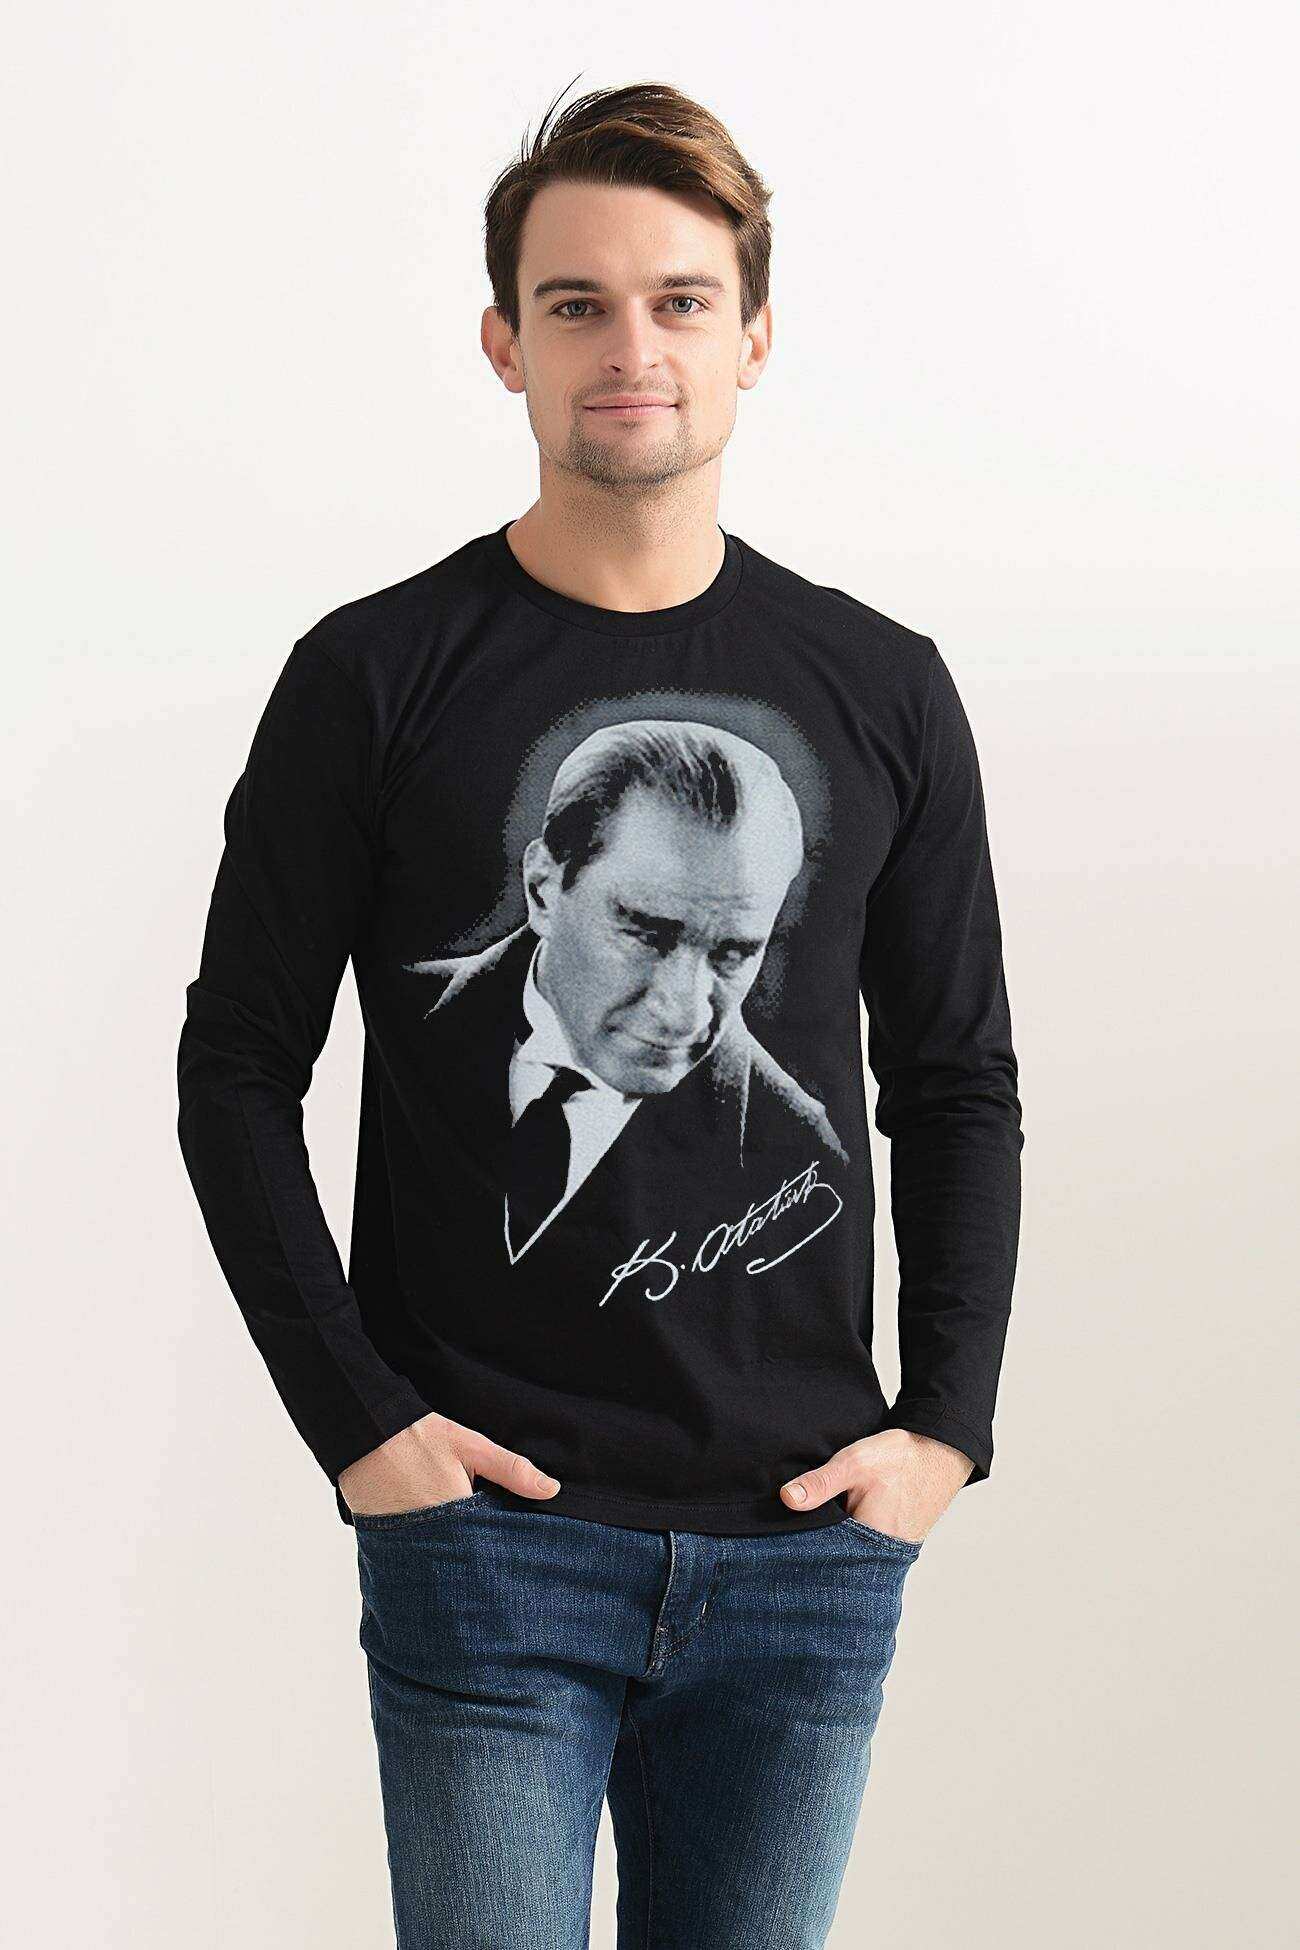 Tshirthane Atatürk Portre sweatshirt uzunkollu